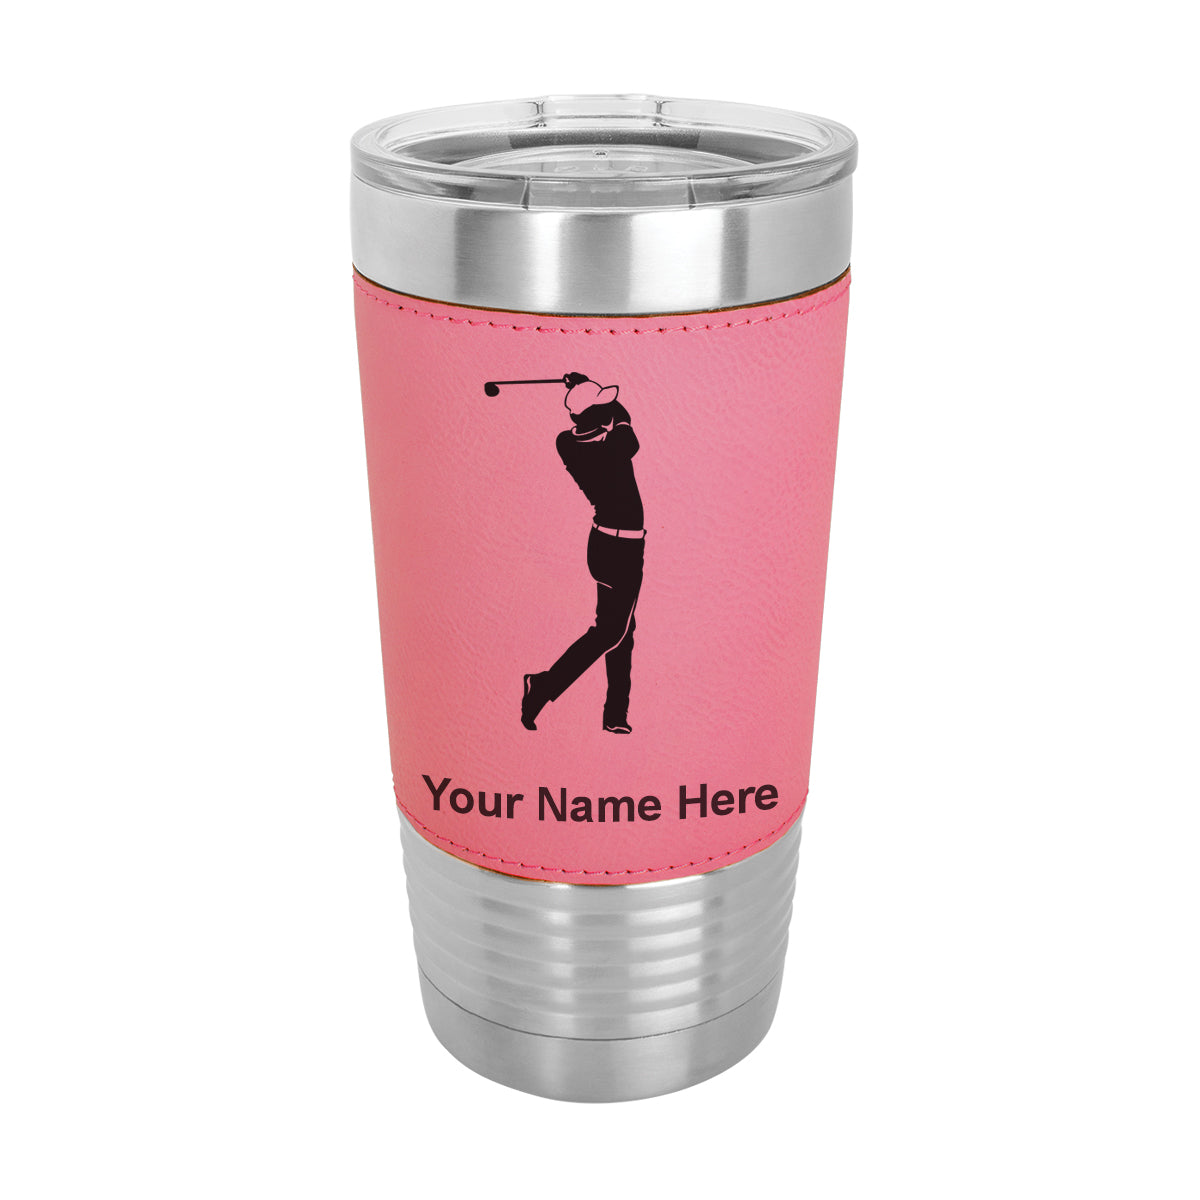 20oz Faux Leather Tumbler Mug, Golfer Golfing, Personalized Engraving Included - LaserGram Custom Engraved Gifts